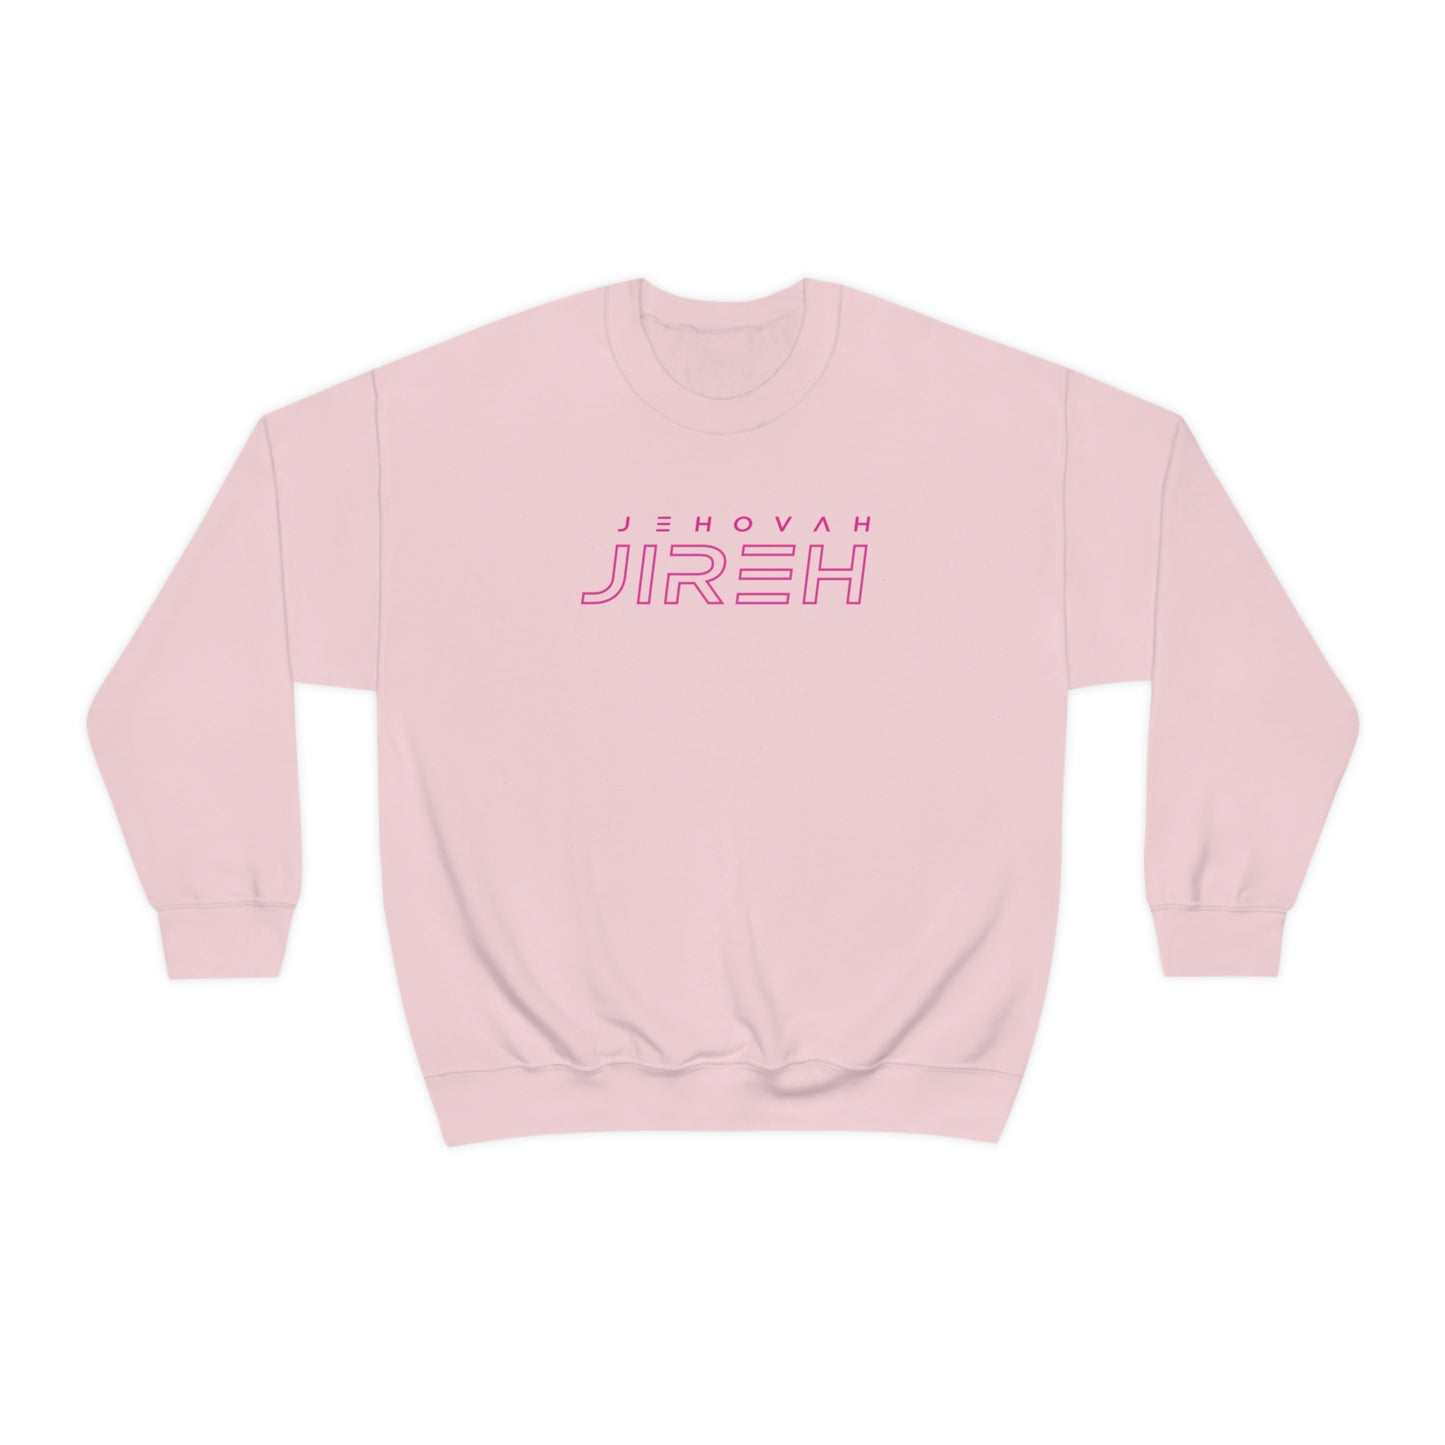 Jehovah Jireh Christian Sweatshirt For Women